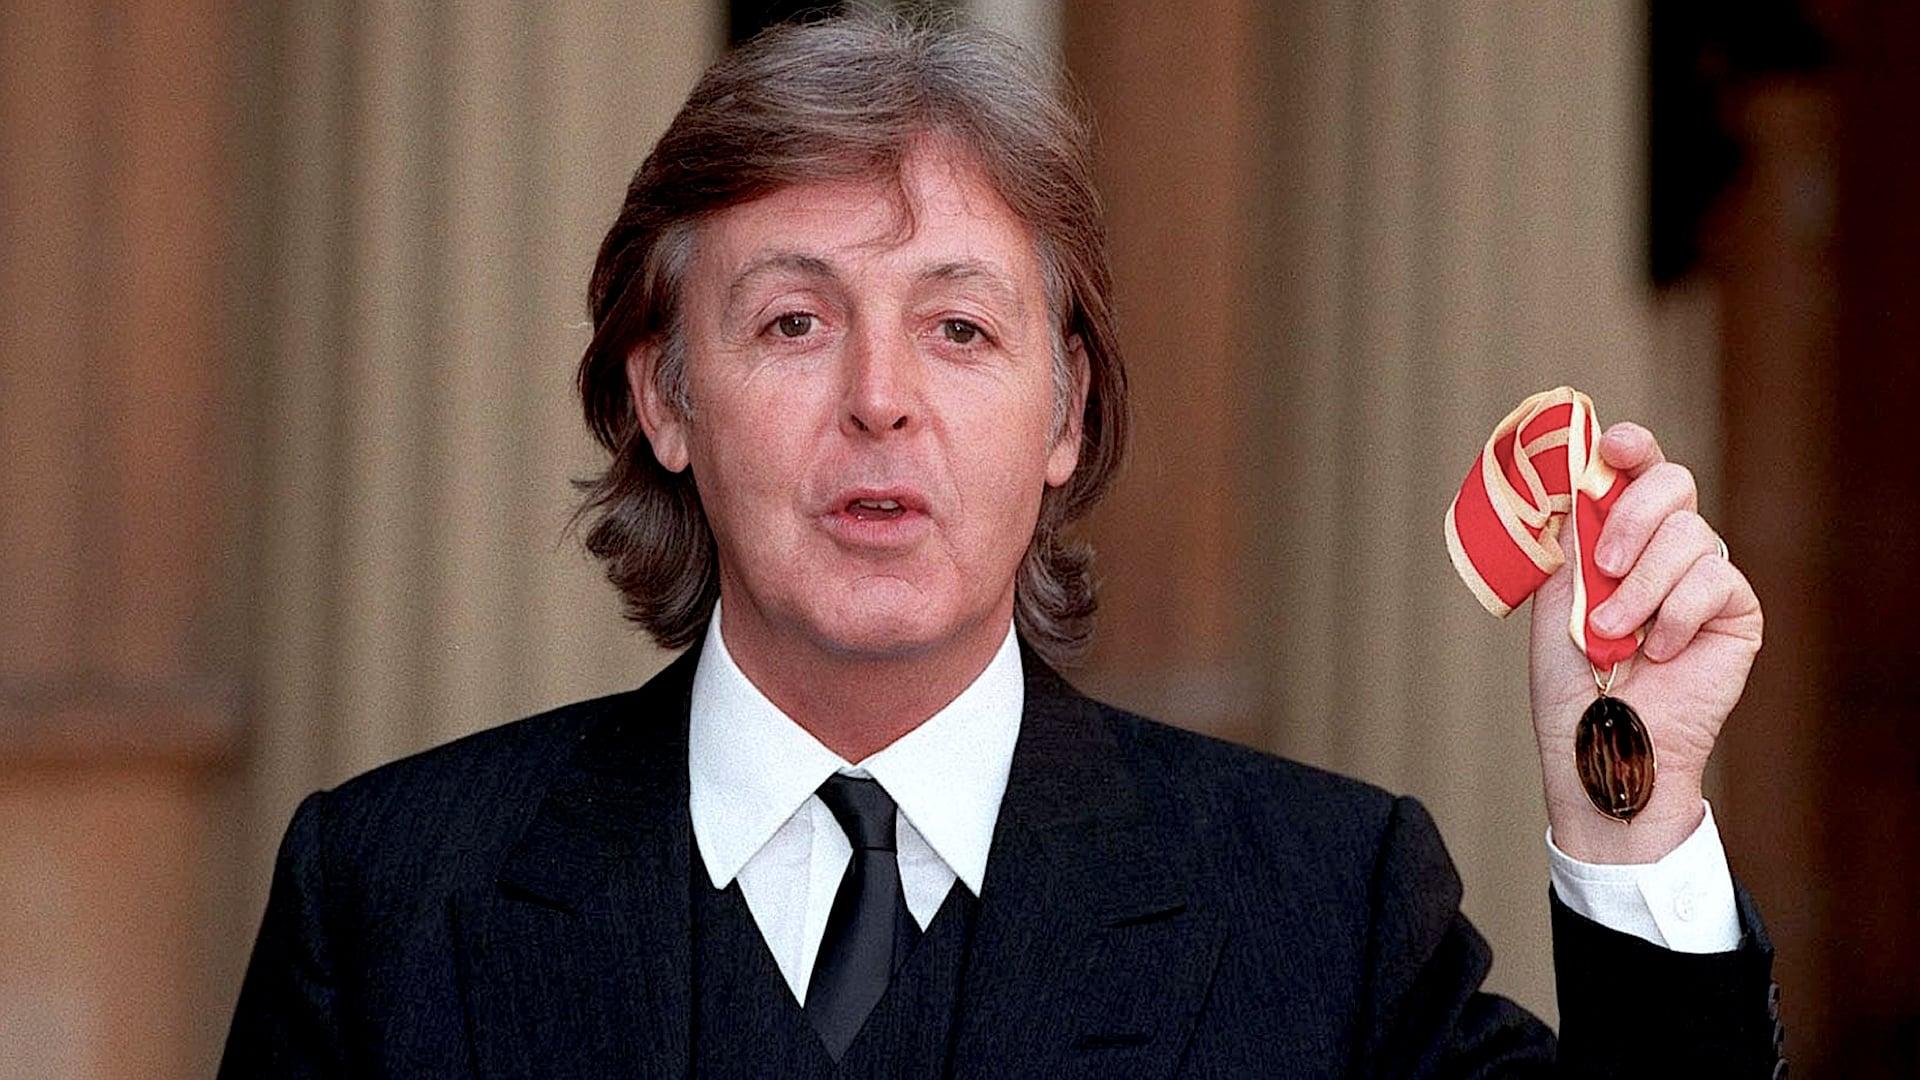 Paul McCartney: In the World Tonight backdrop